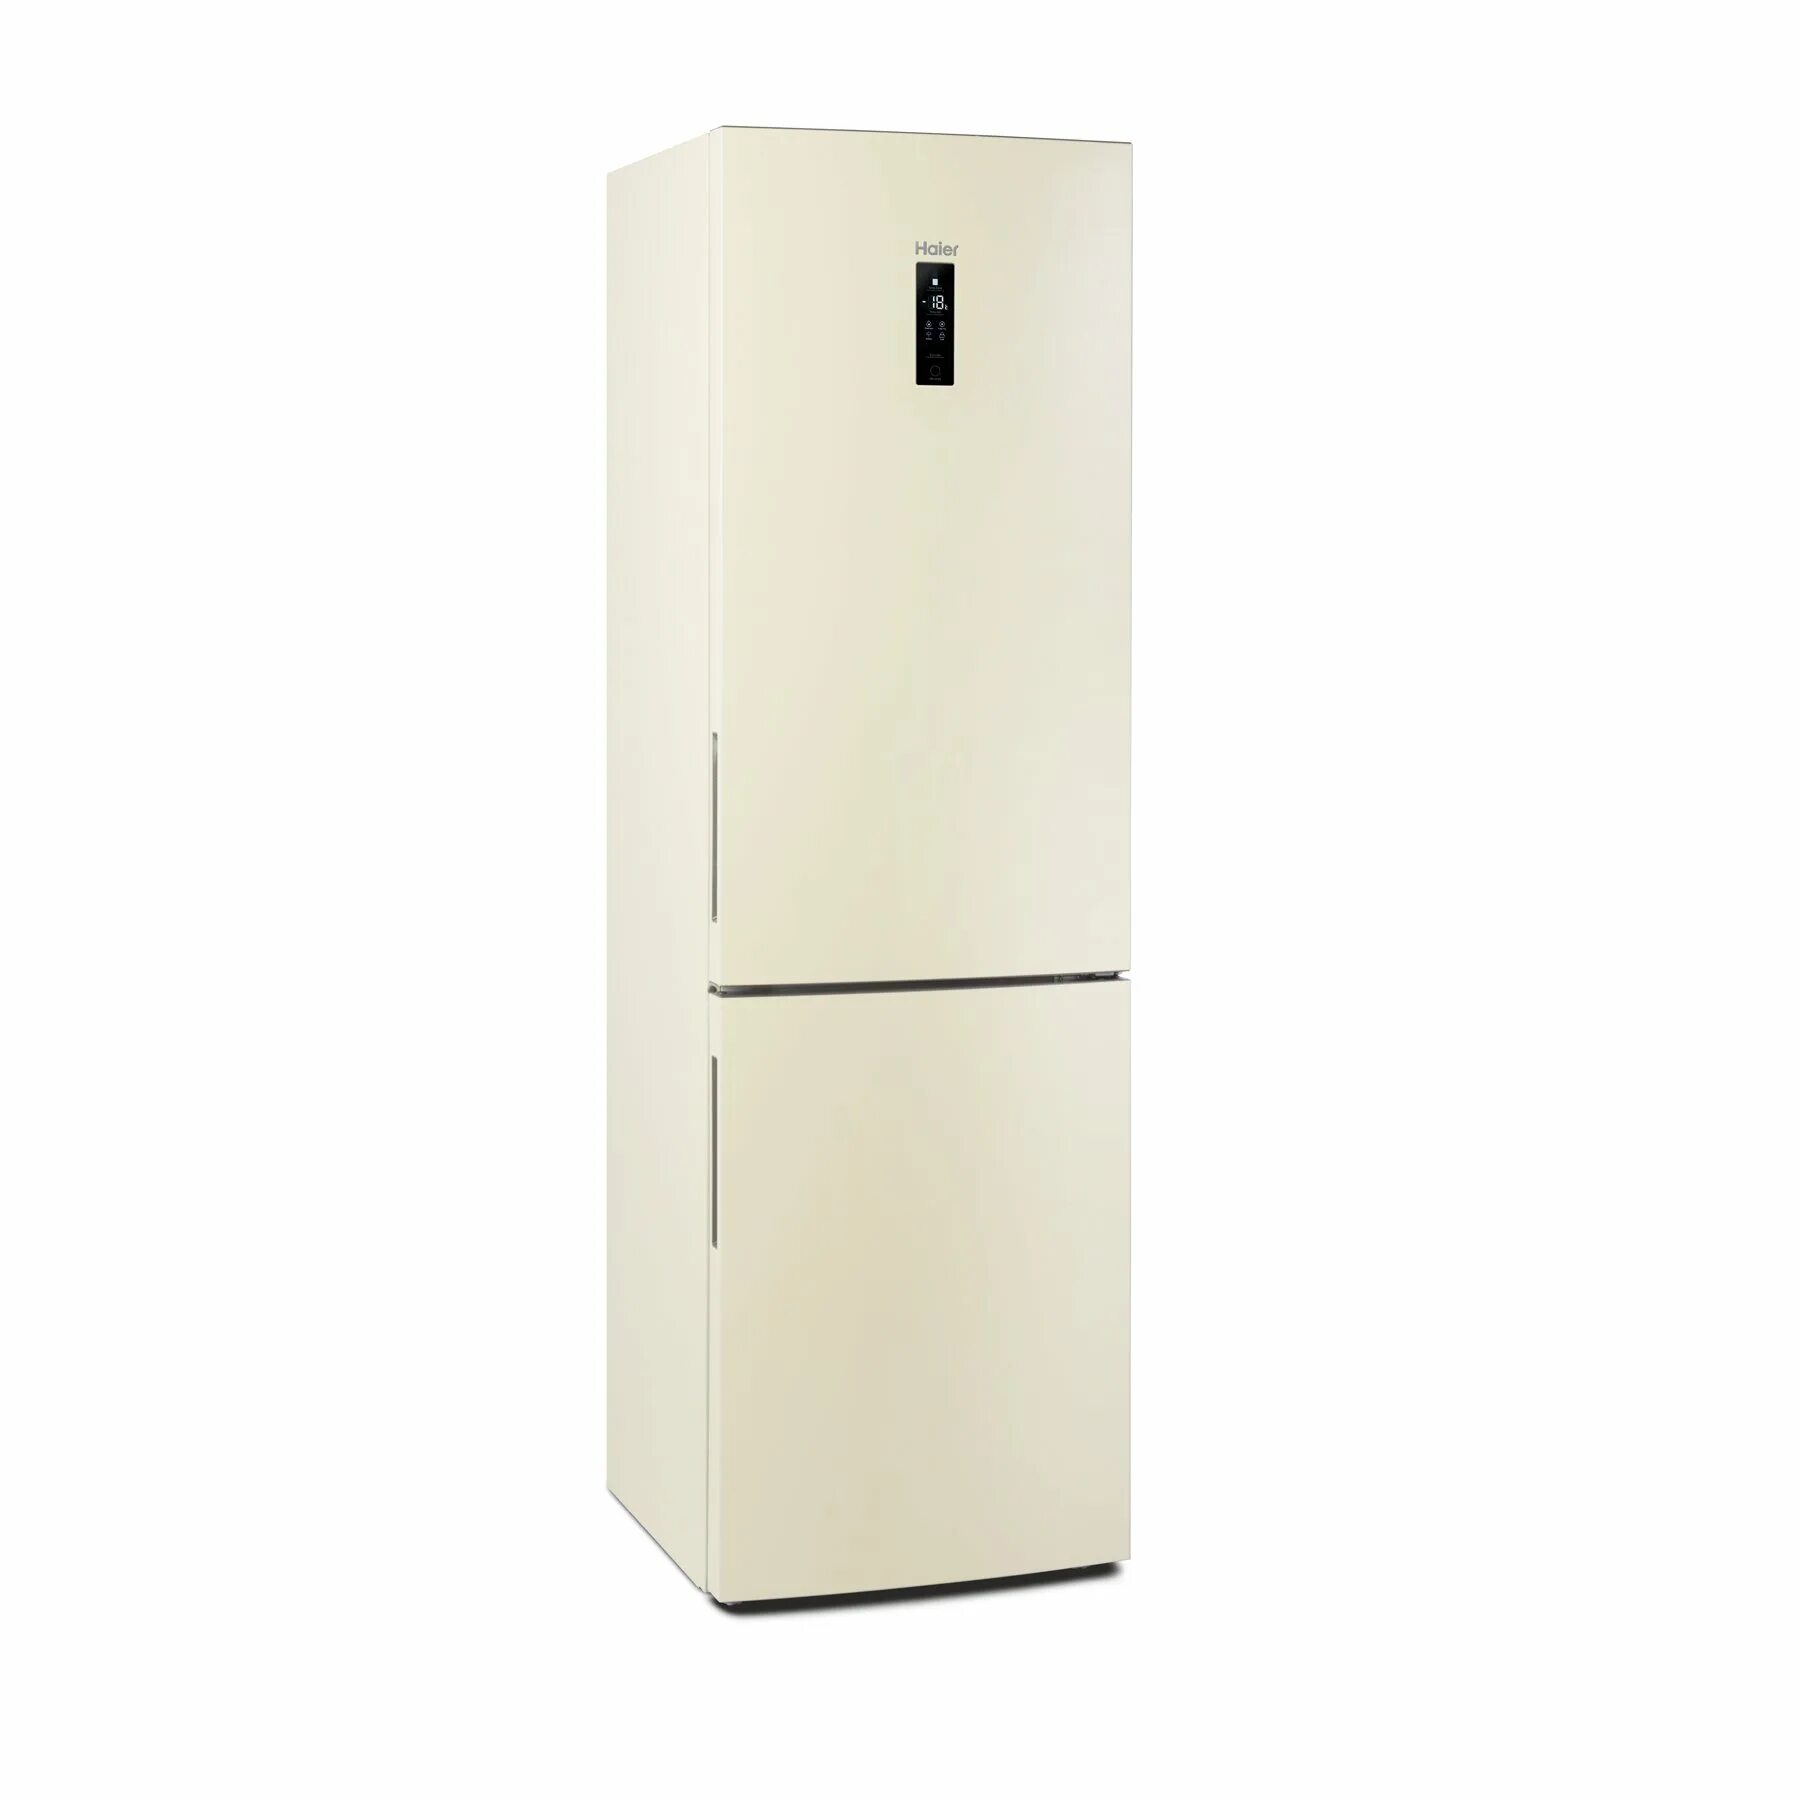 Холодильник Haier c2f636ccrg бежевый. Холодильник Haier c2f637ccg. Холодильник Хайер 637 бежевый.